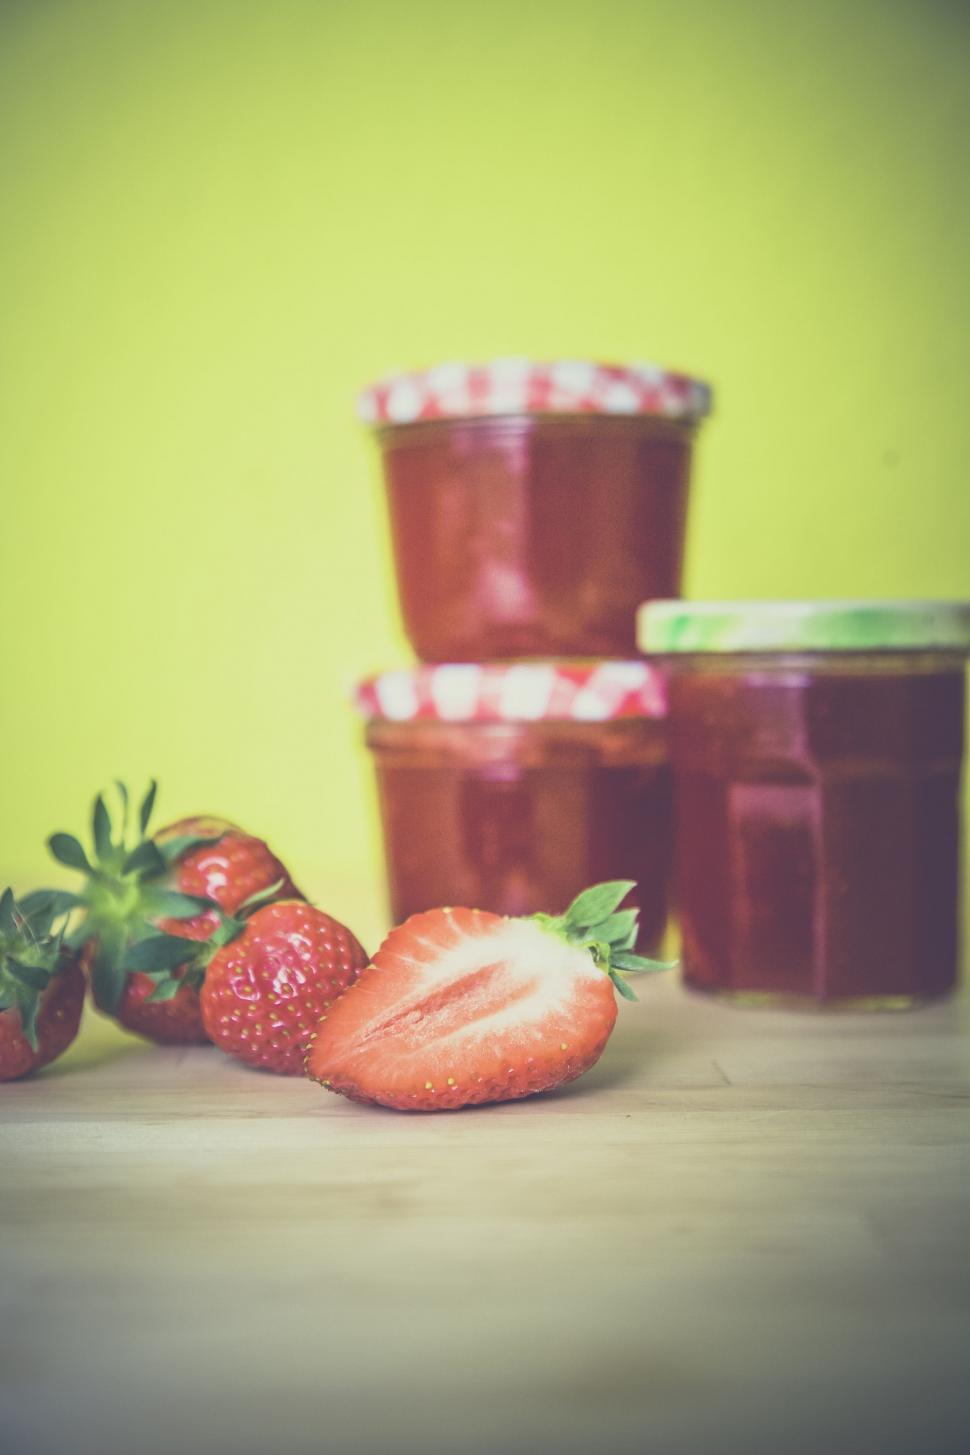 Free Image of Strawberries and Jam Jars  